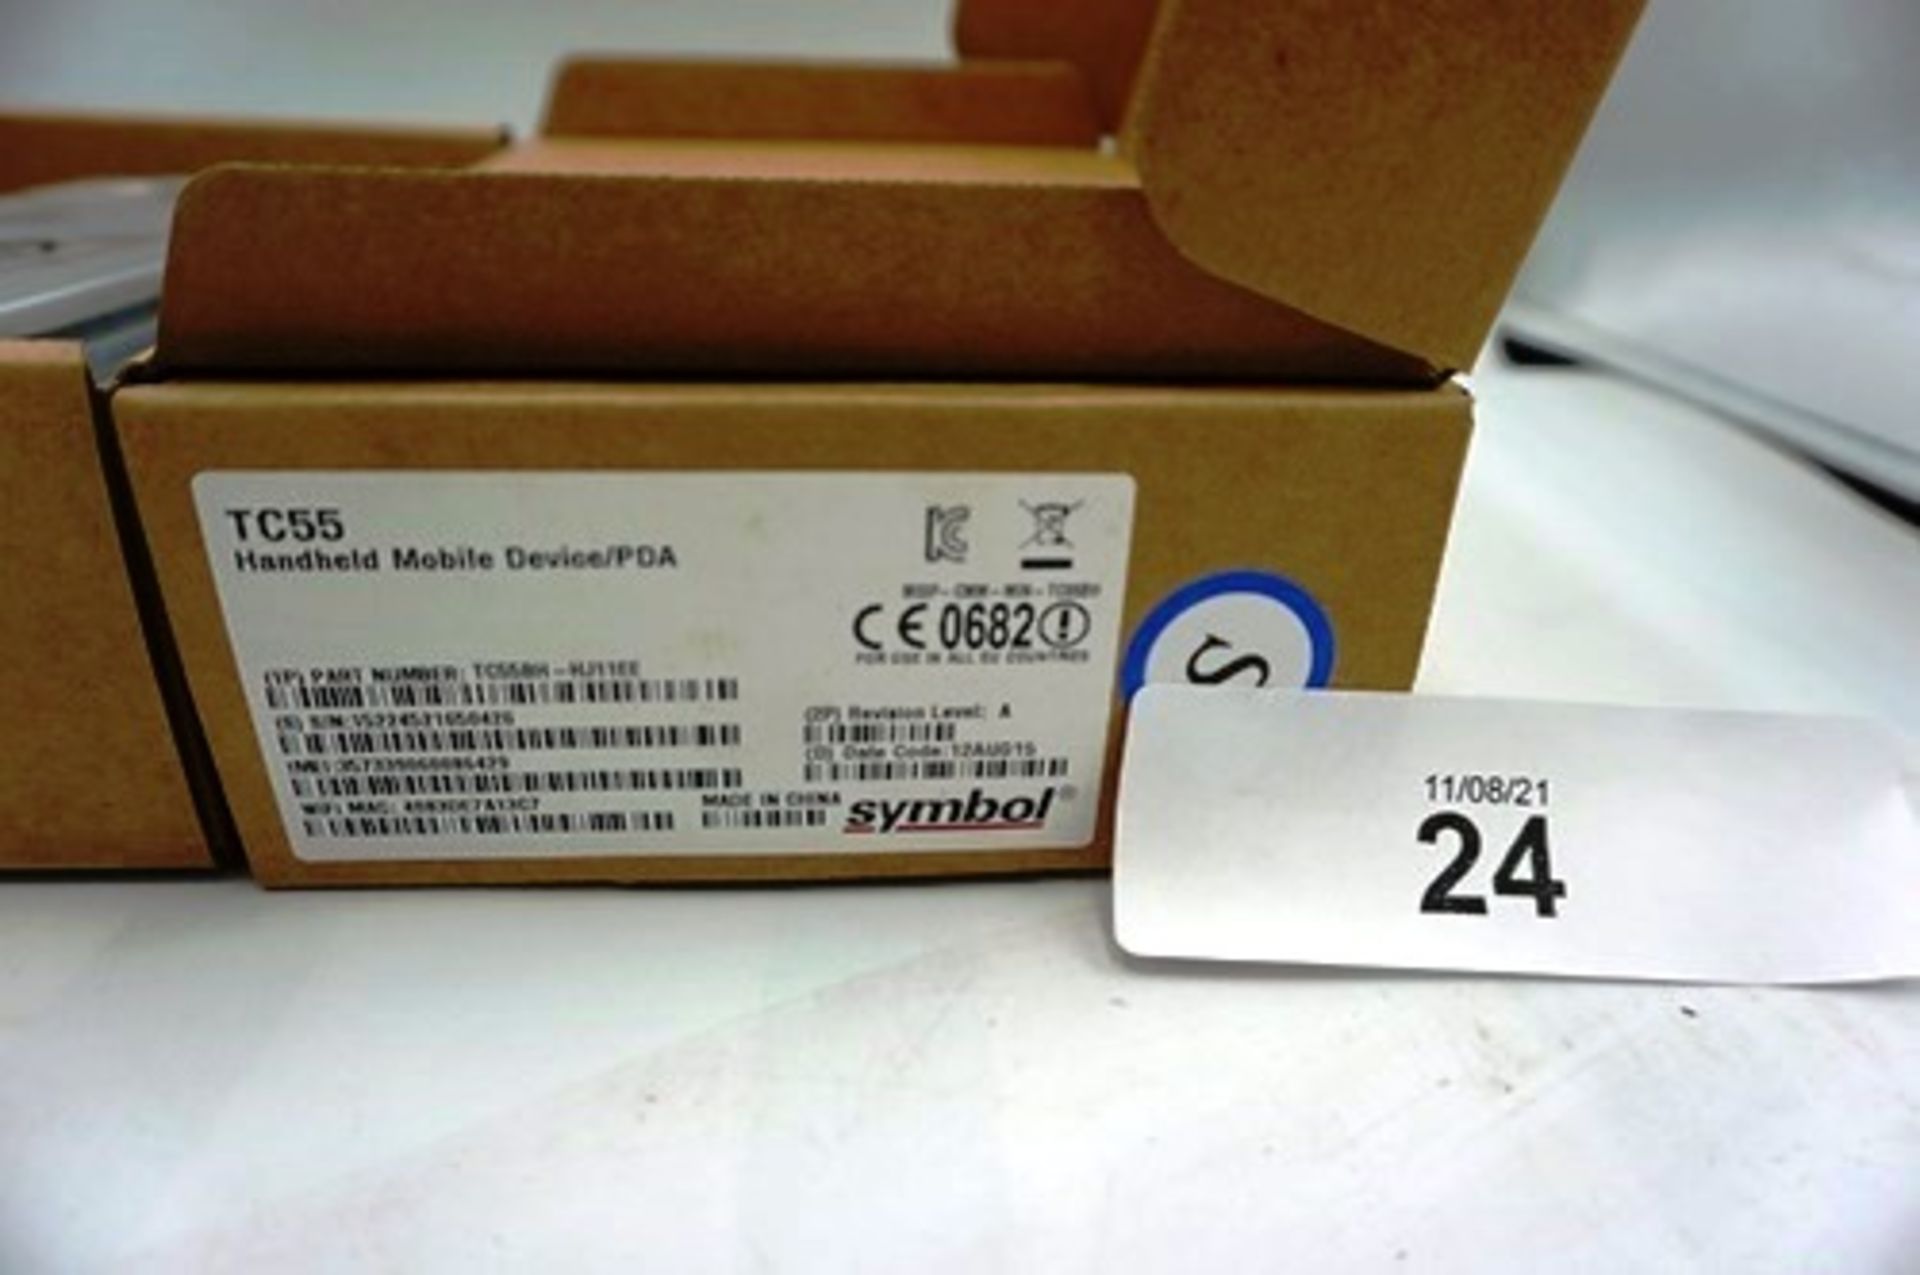 2 x Symbol TC55 handheld mobile retail PDA's, model TC55BH - Sealed new in box (C1) - Image 2 of 2